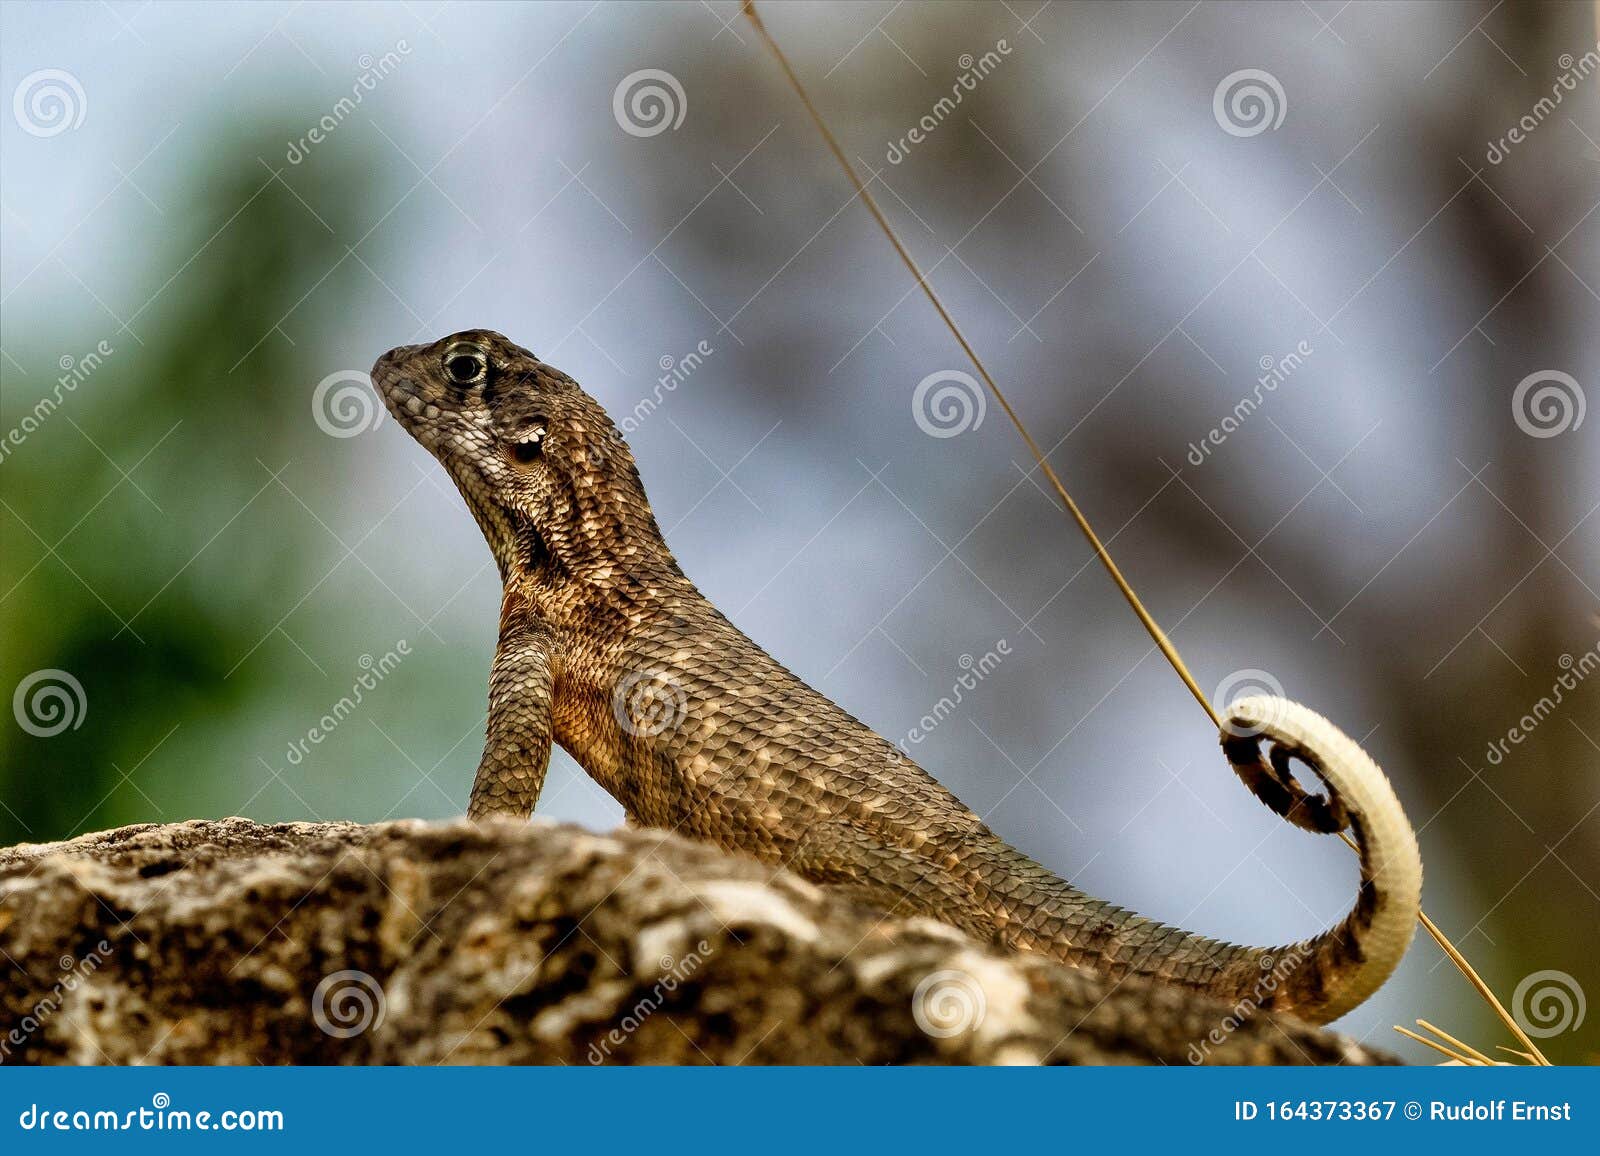 cuban curlytail lizard, leiocephalus cubensis taken in trinidad, cuba.